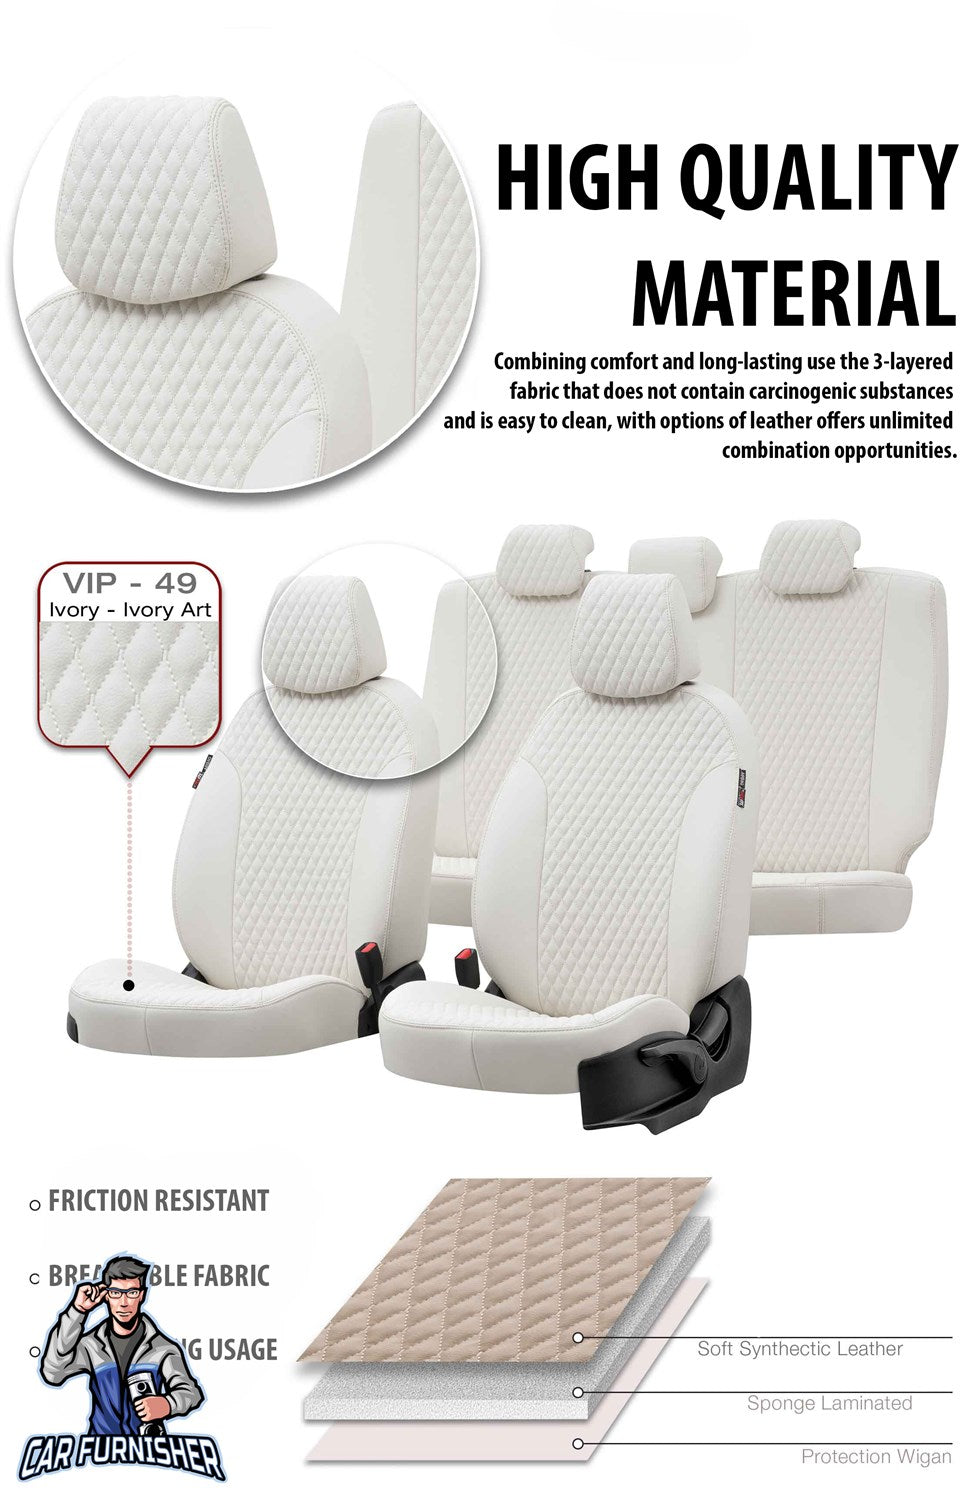 Isuzu D-Max Seat Covers Amsterdam Leather Design Beige Leather